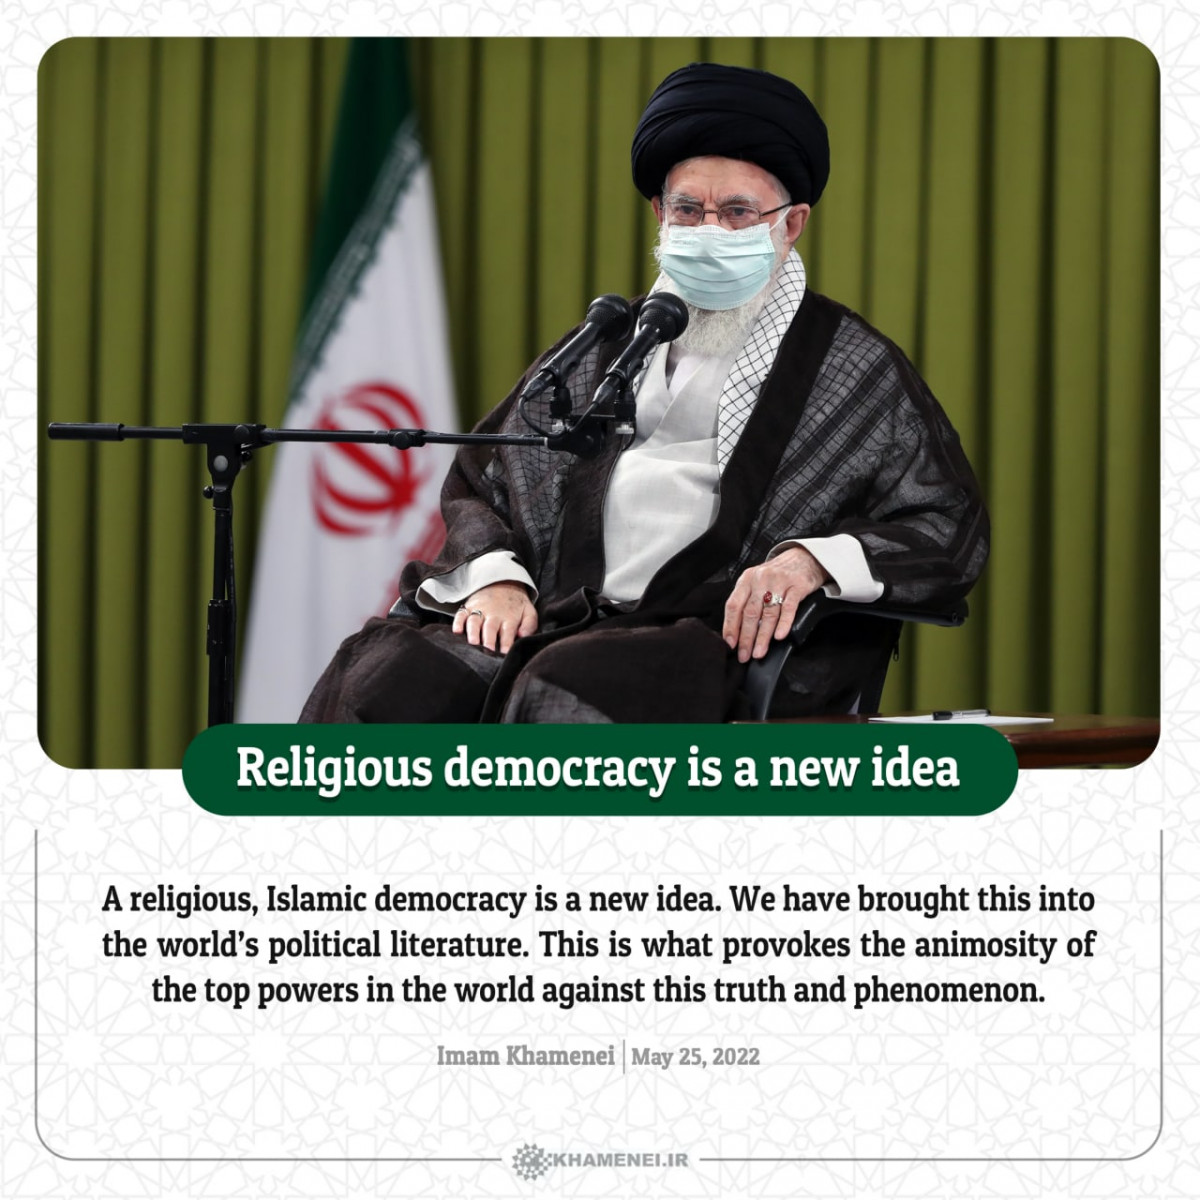 Religious democracy is a new idea